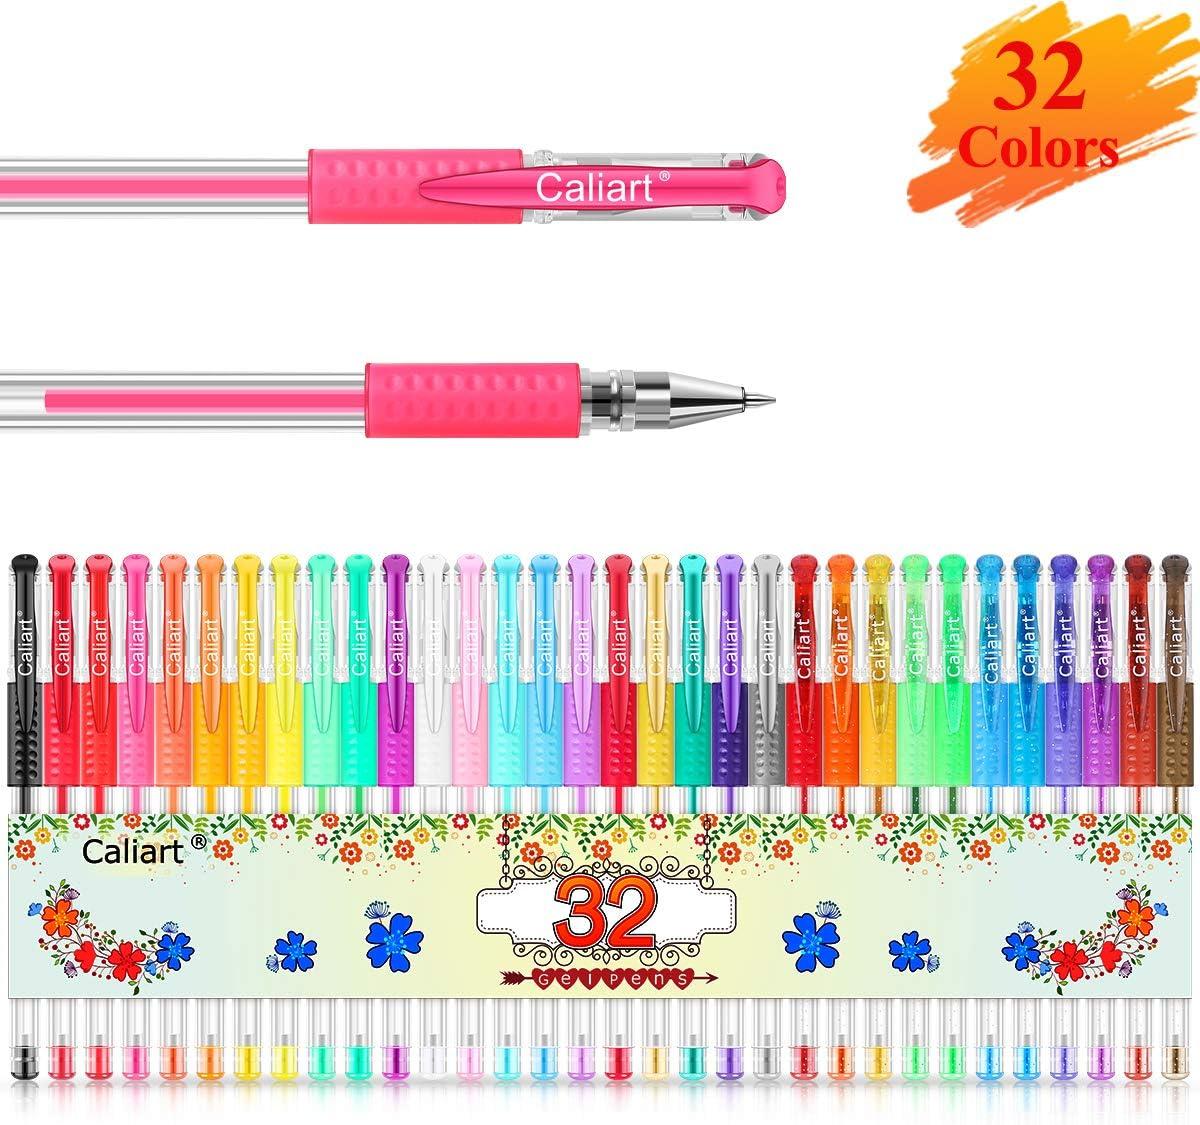 Caliart Gel Pens 32 Colors Gel Pen Set 40% More Ink Colored Gel Markers  Fine Point Pens for Kids Adult Coloring Books Drawing Doodling Crafting  Journaling Scrapbooking